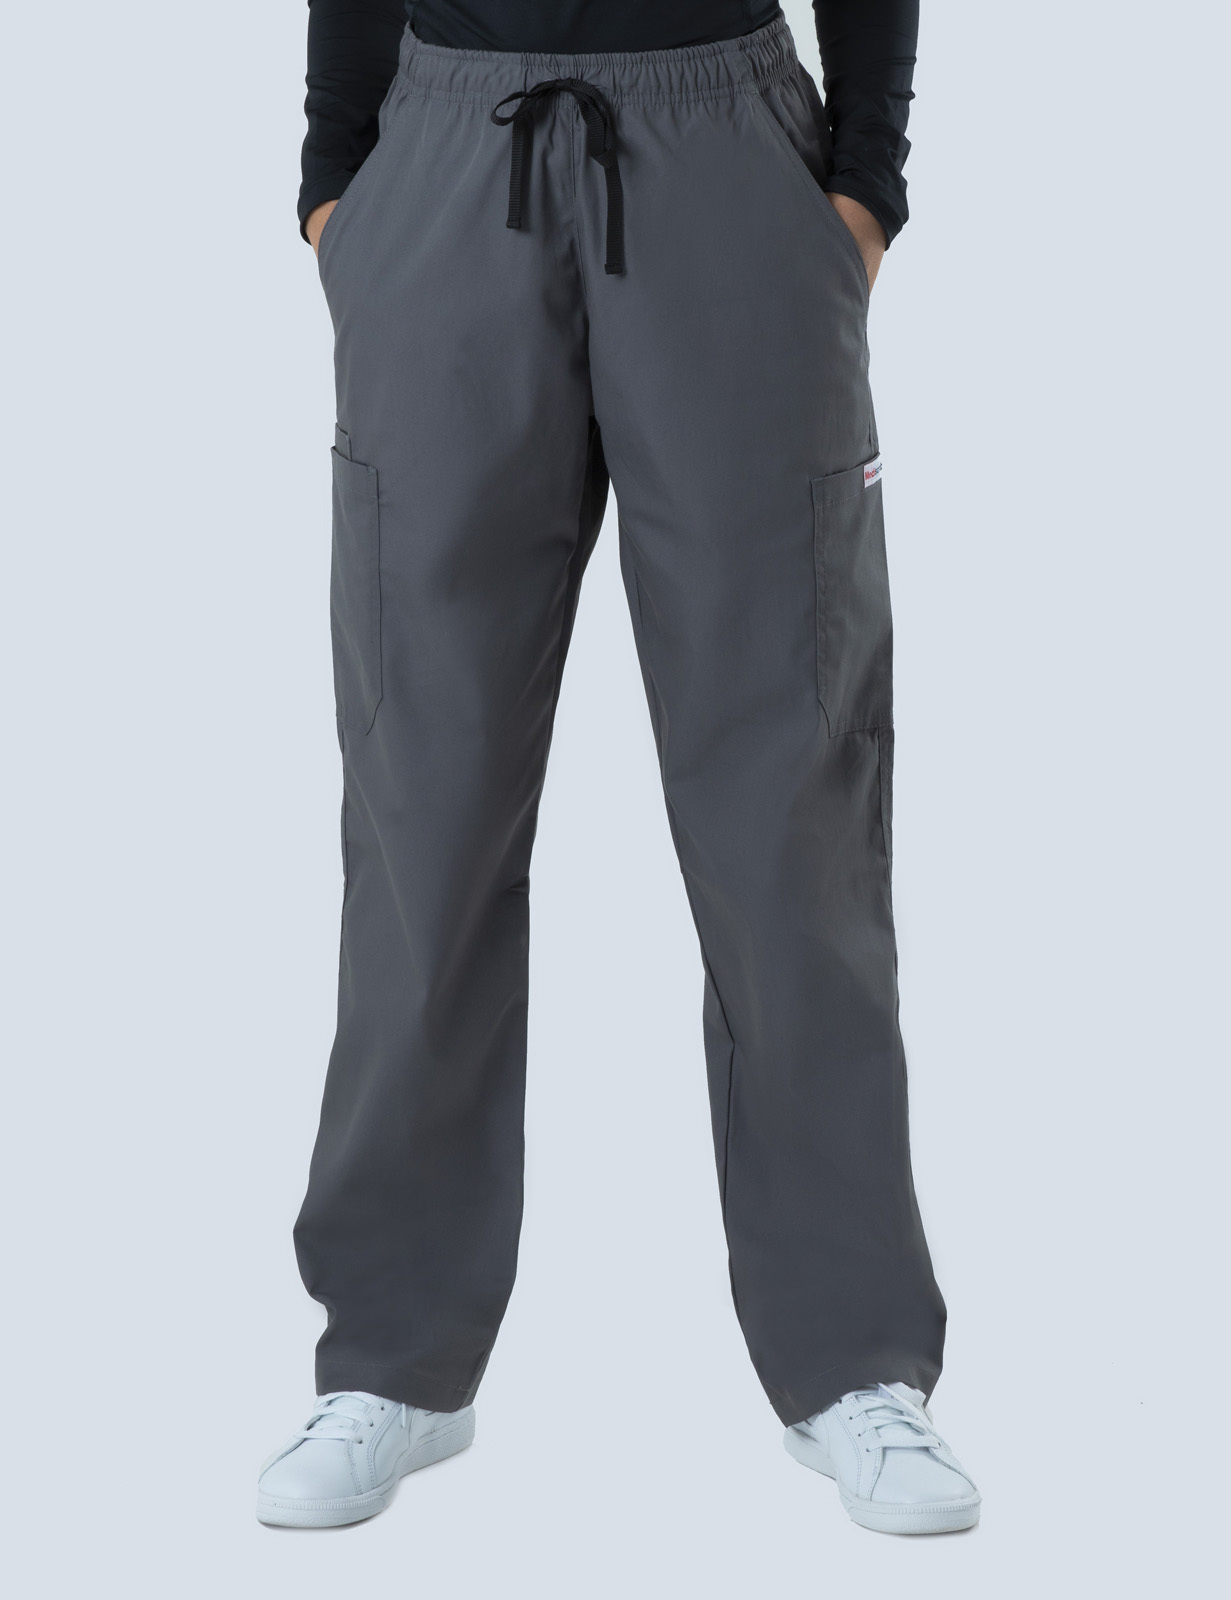 Rockhampton Base Hospiital - ED AIN (Women's Fit Spandex Scrub Top and Cargo Pants in Steel Grey incl Logos)